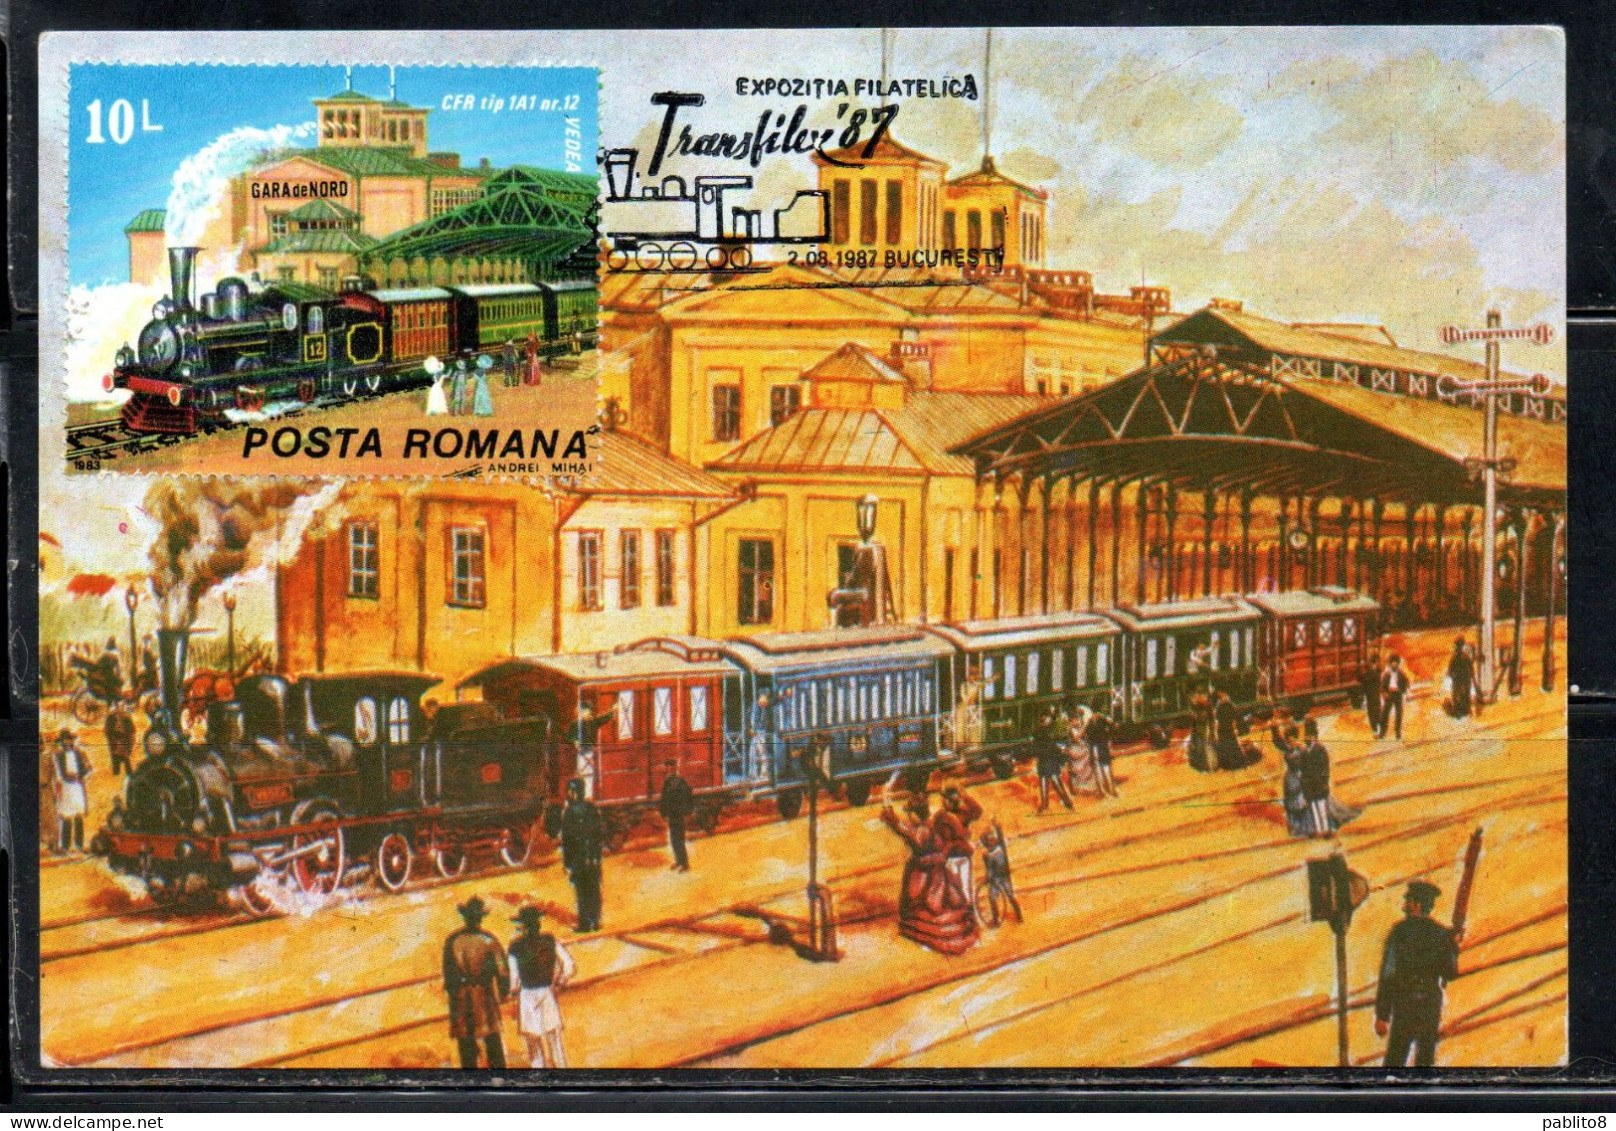 ROMANIA 1983  TRAIN STATION LEAVING GARE DE NORD CFR 1A1 ORIENT EXPRESS CENTENARY 10L MAXI MAXIMUM CARD - Cartoline Maximum